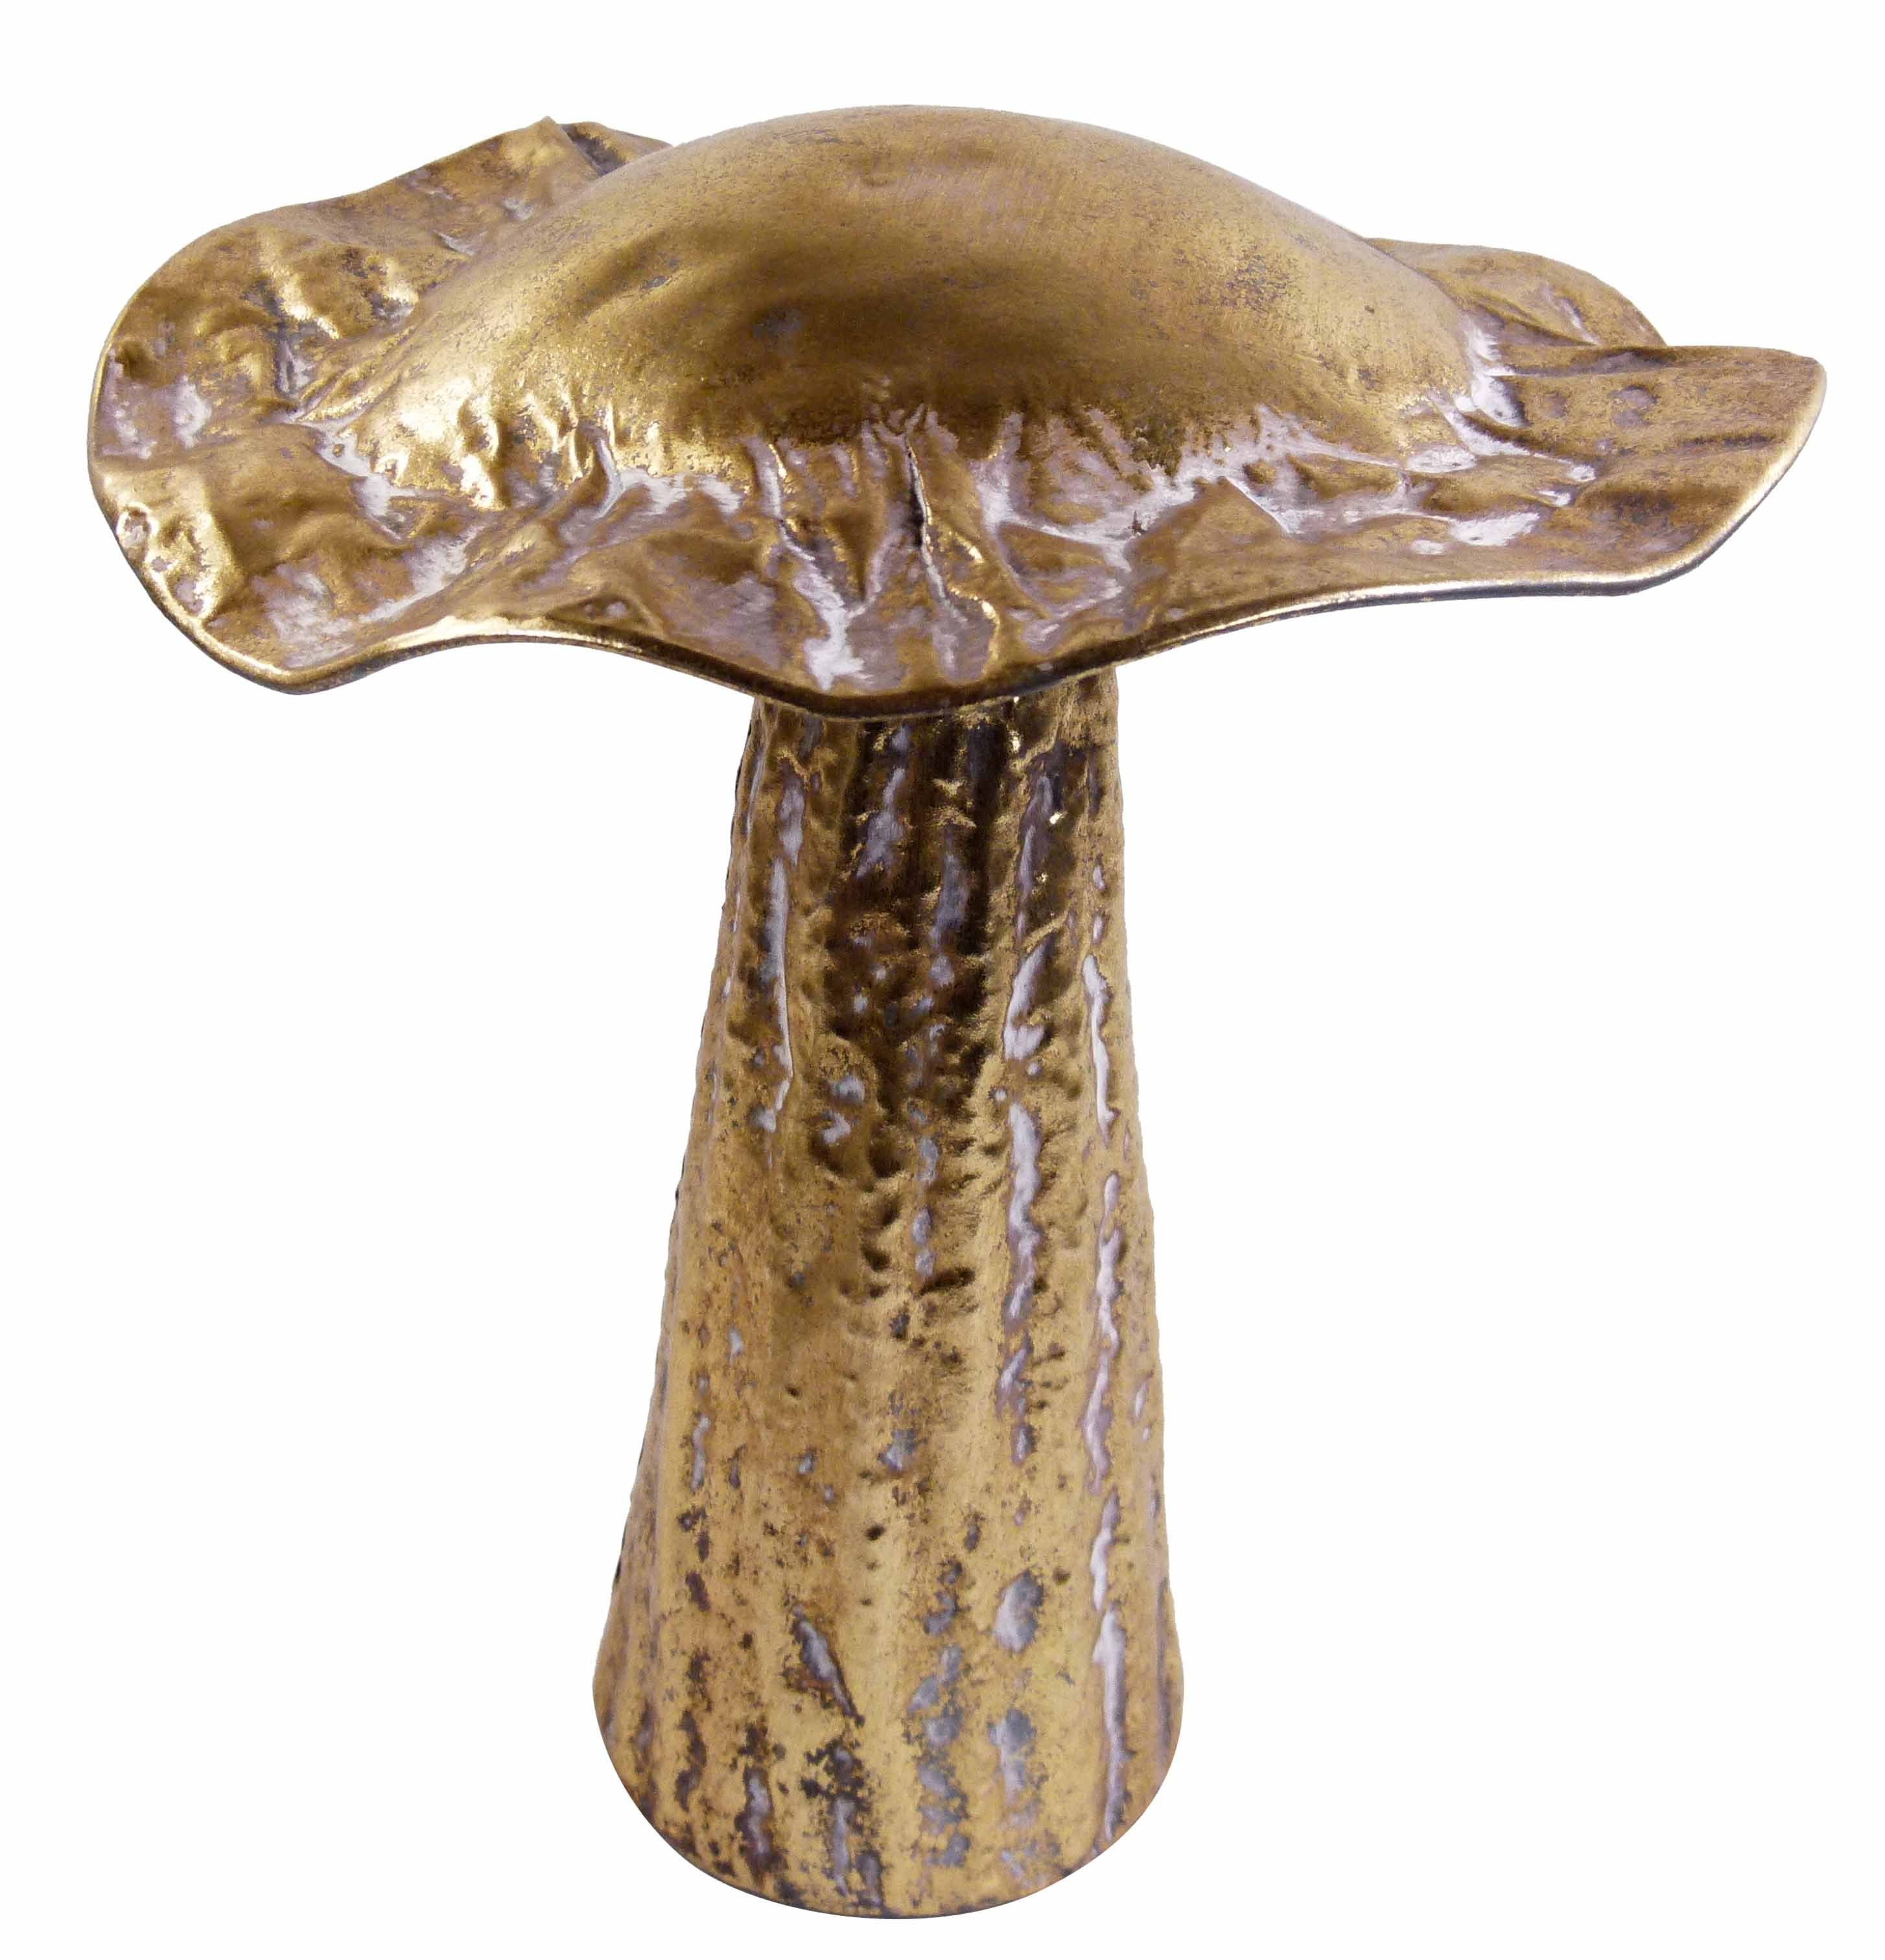 [Sonderpreis für begrenzte Menge] GlasArt Dekofigur Dekoaufsteller Pilzfiguren Herbst Dekoration Pilze Herbstdeko Gold 18-39cm